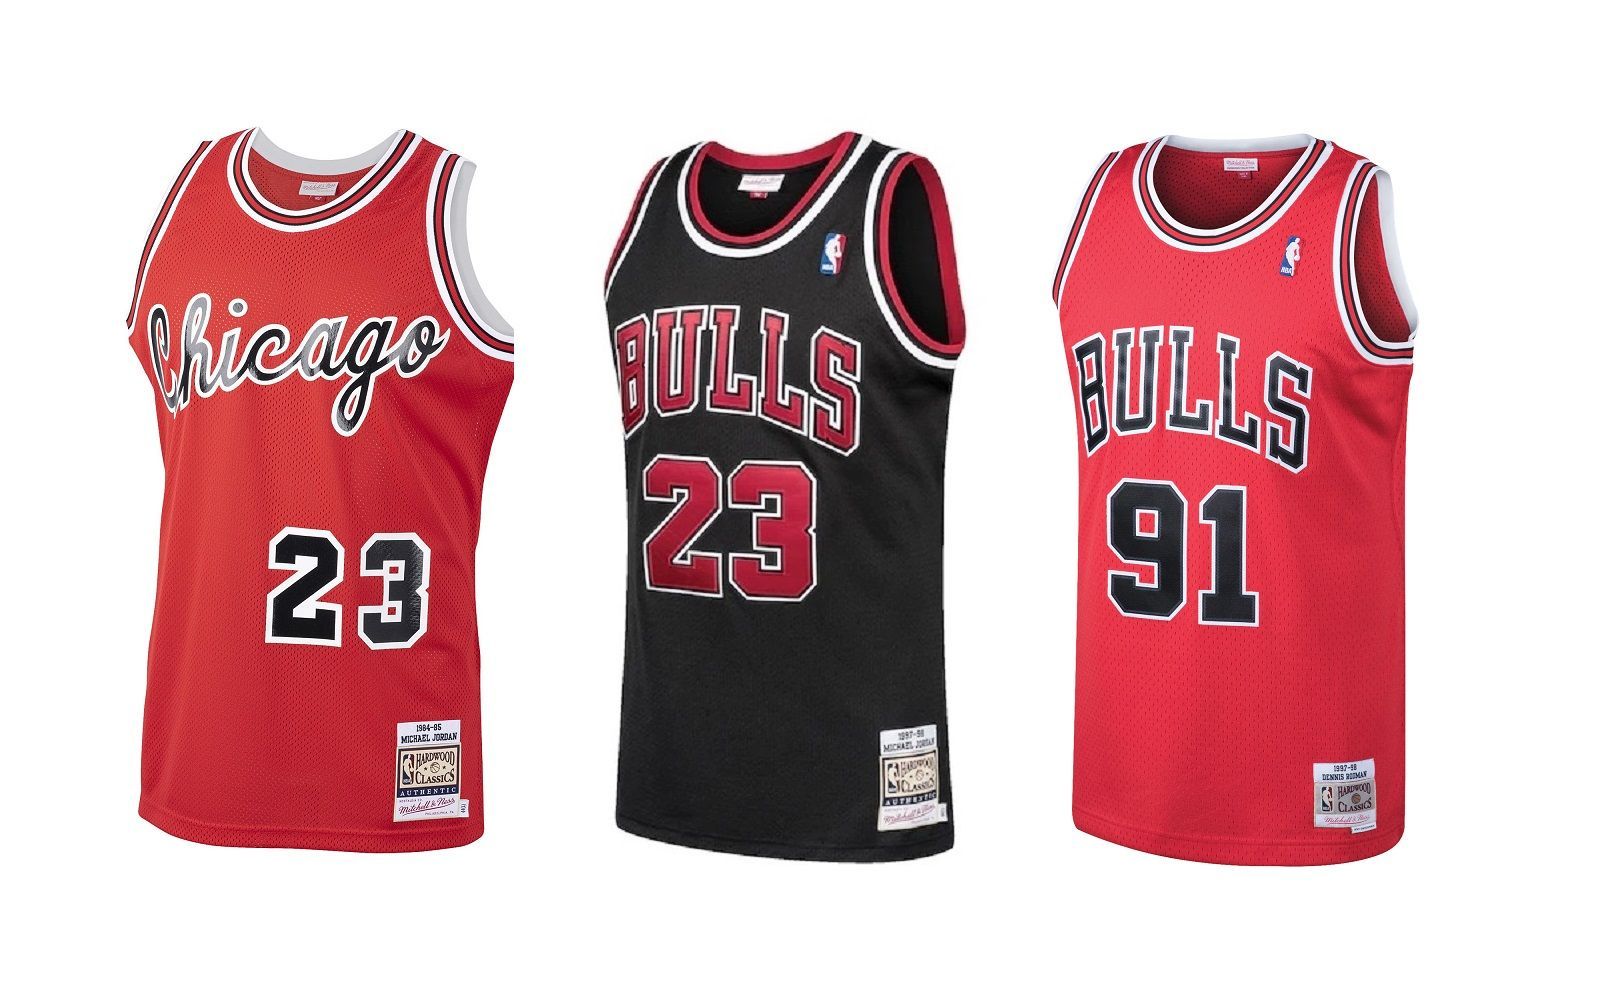 The new Paris Saint-Germain shirt inspired by Michael Jordan's Chicago Bulls